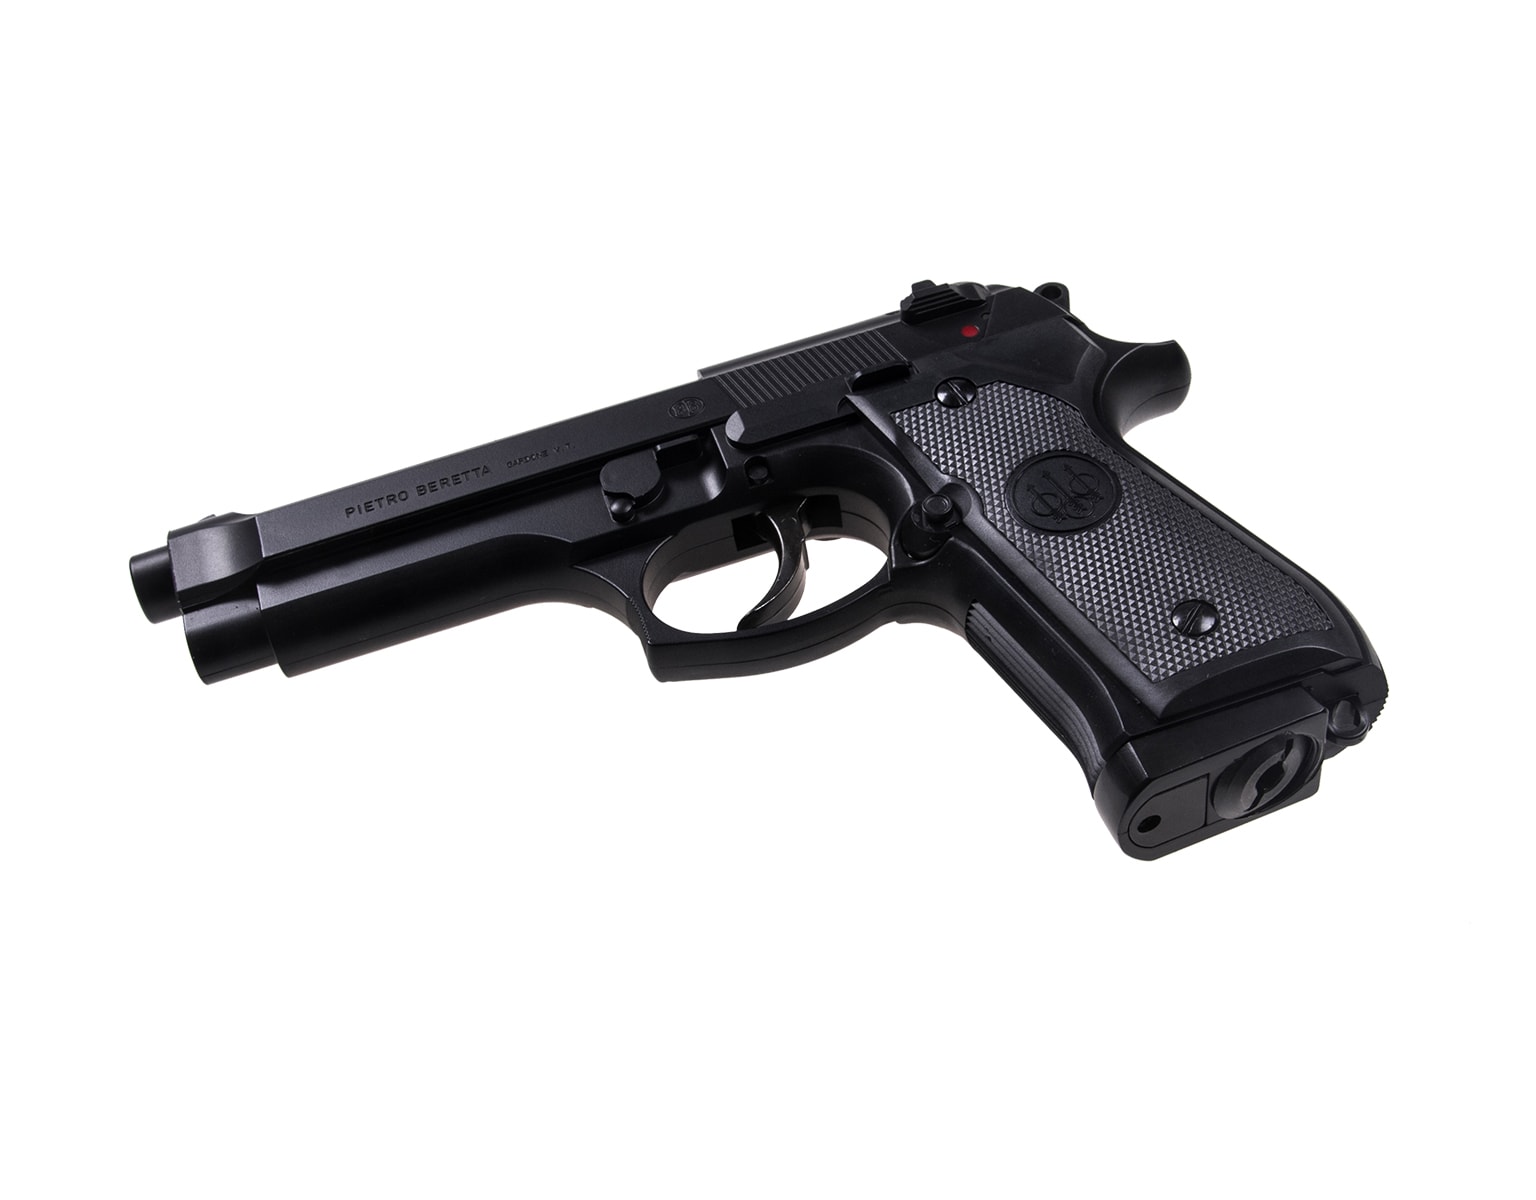 Pistolet GNB Beretta Mod.92 FS 